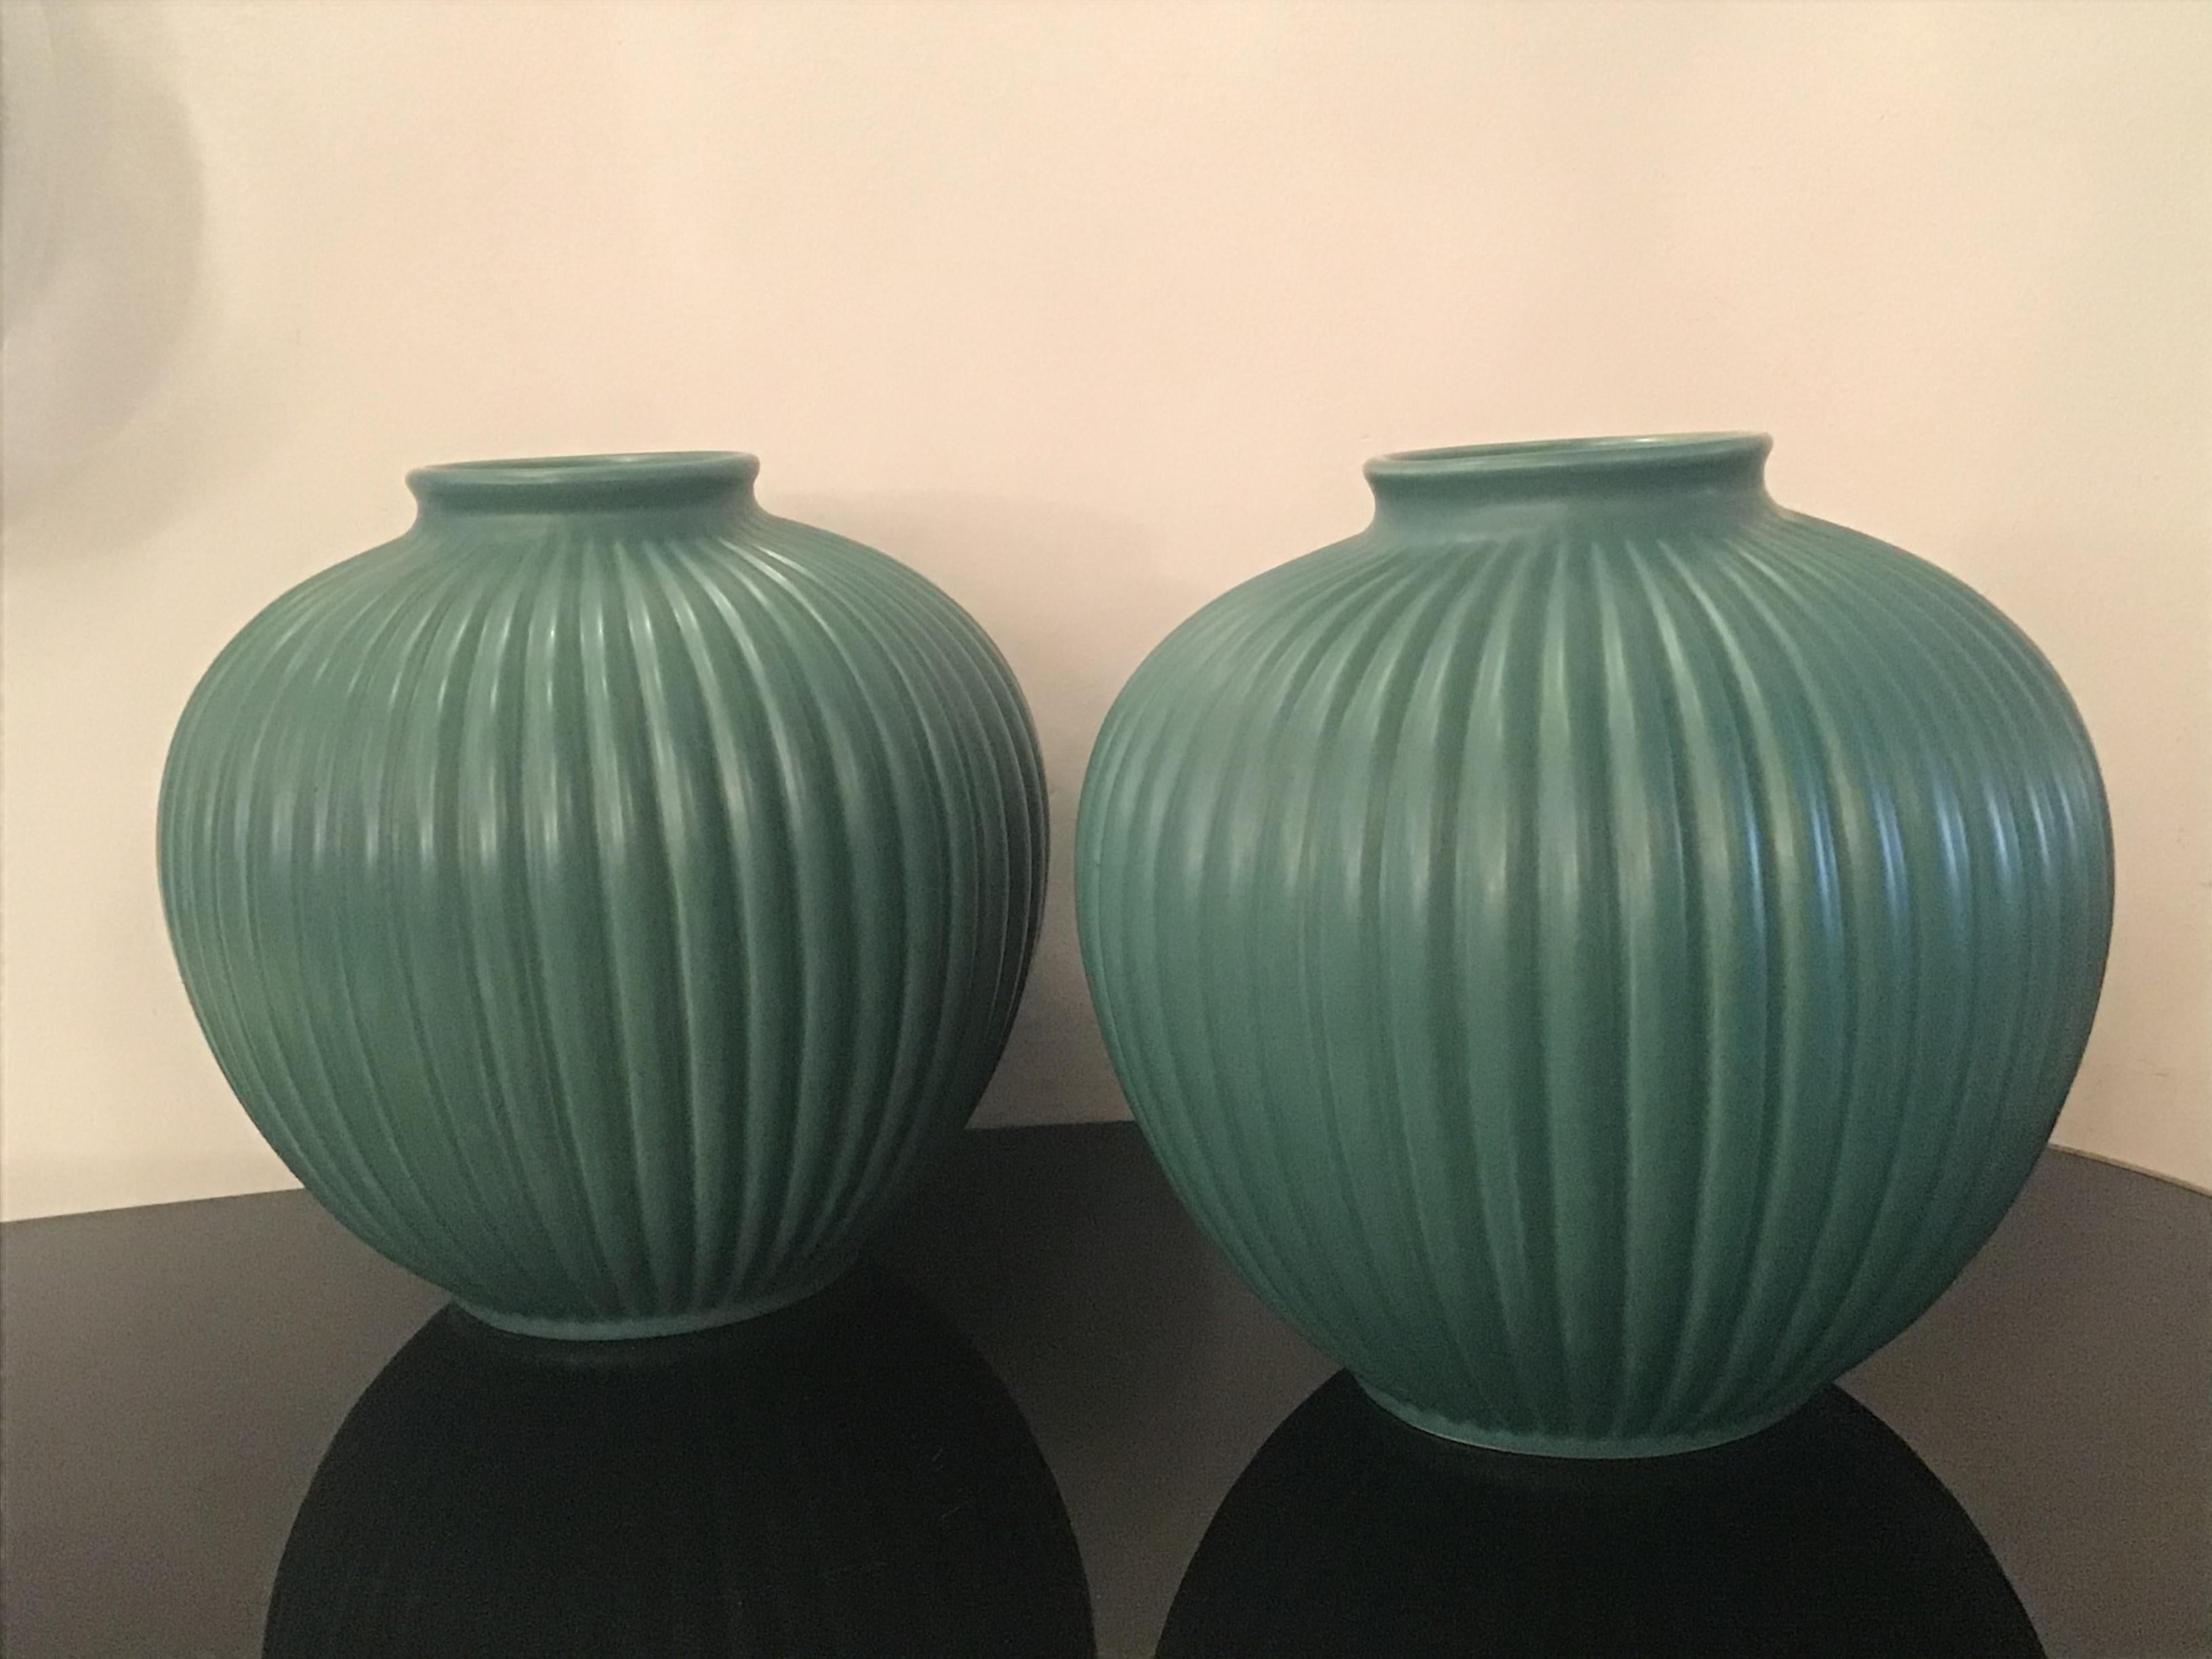 Richard Ginori Giovanni Gariboldi Pair of Vases Green Ceramic 1950 Italy For Sale 3